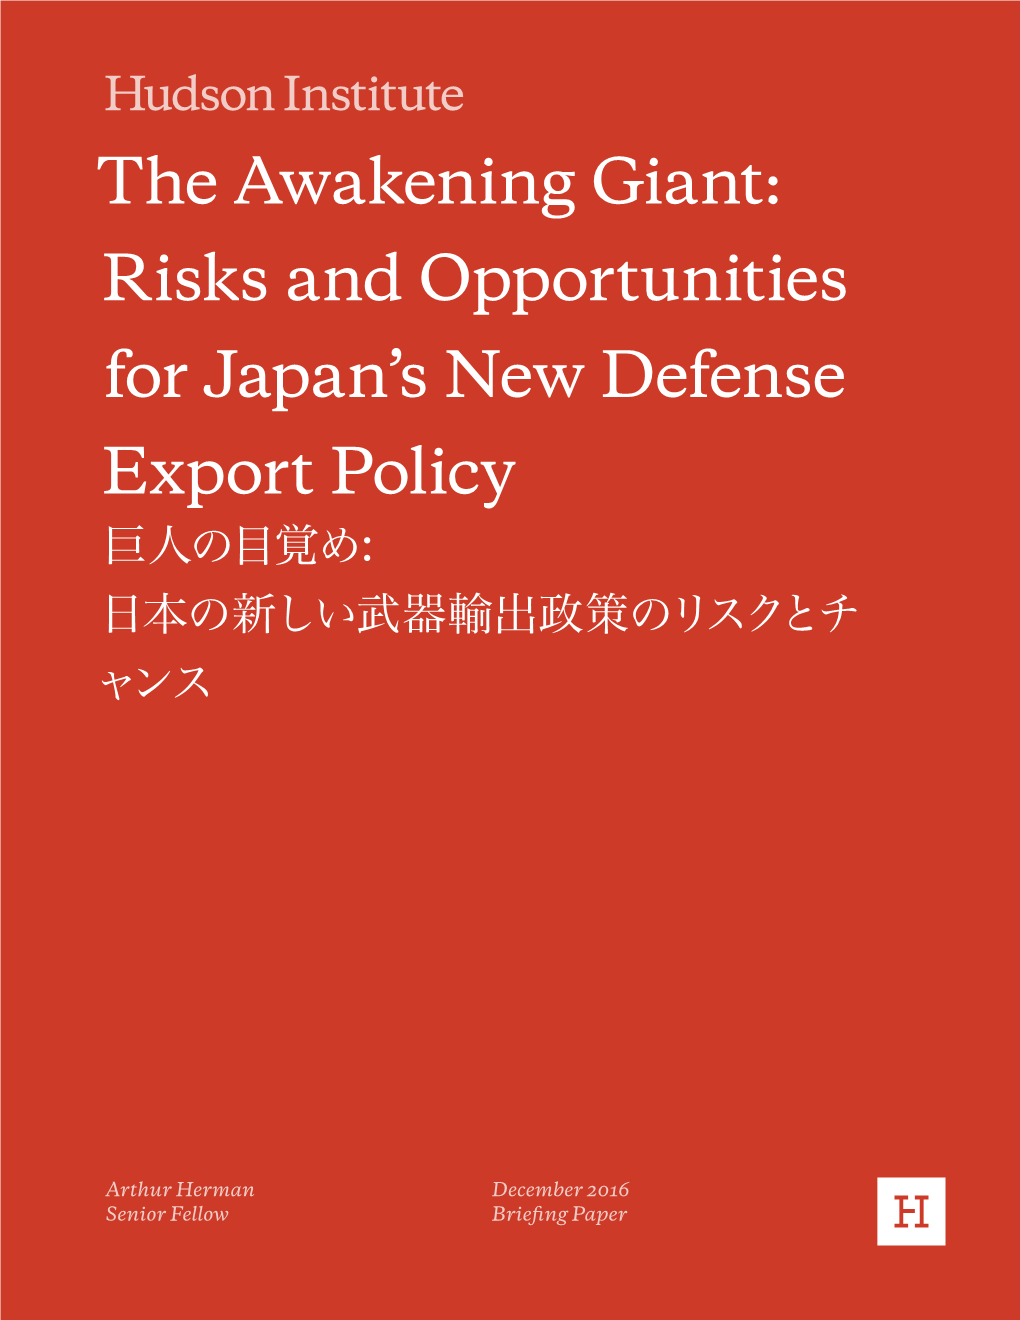 The Awakening Giant: Risks and Opportunities for Japan's New